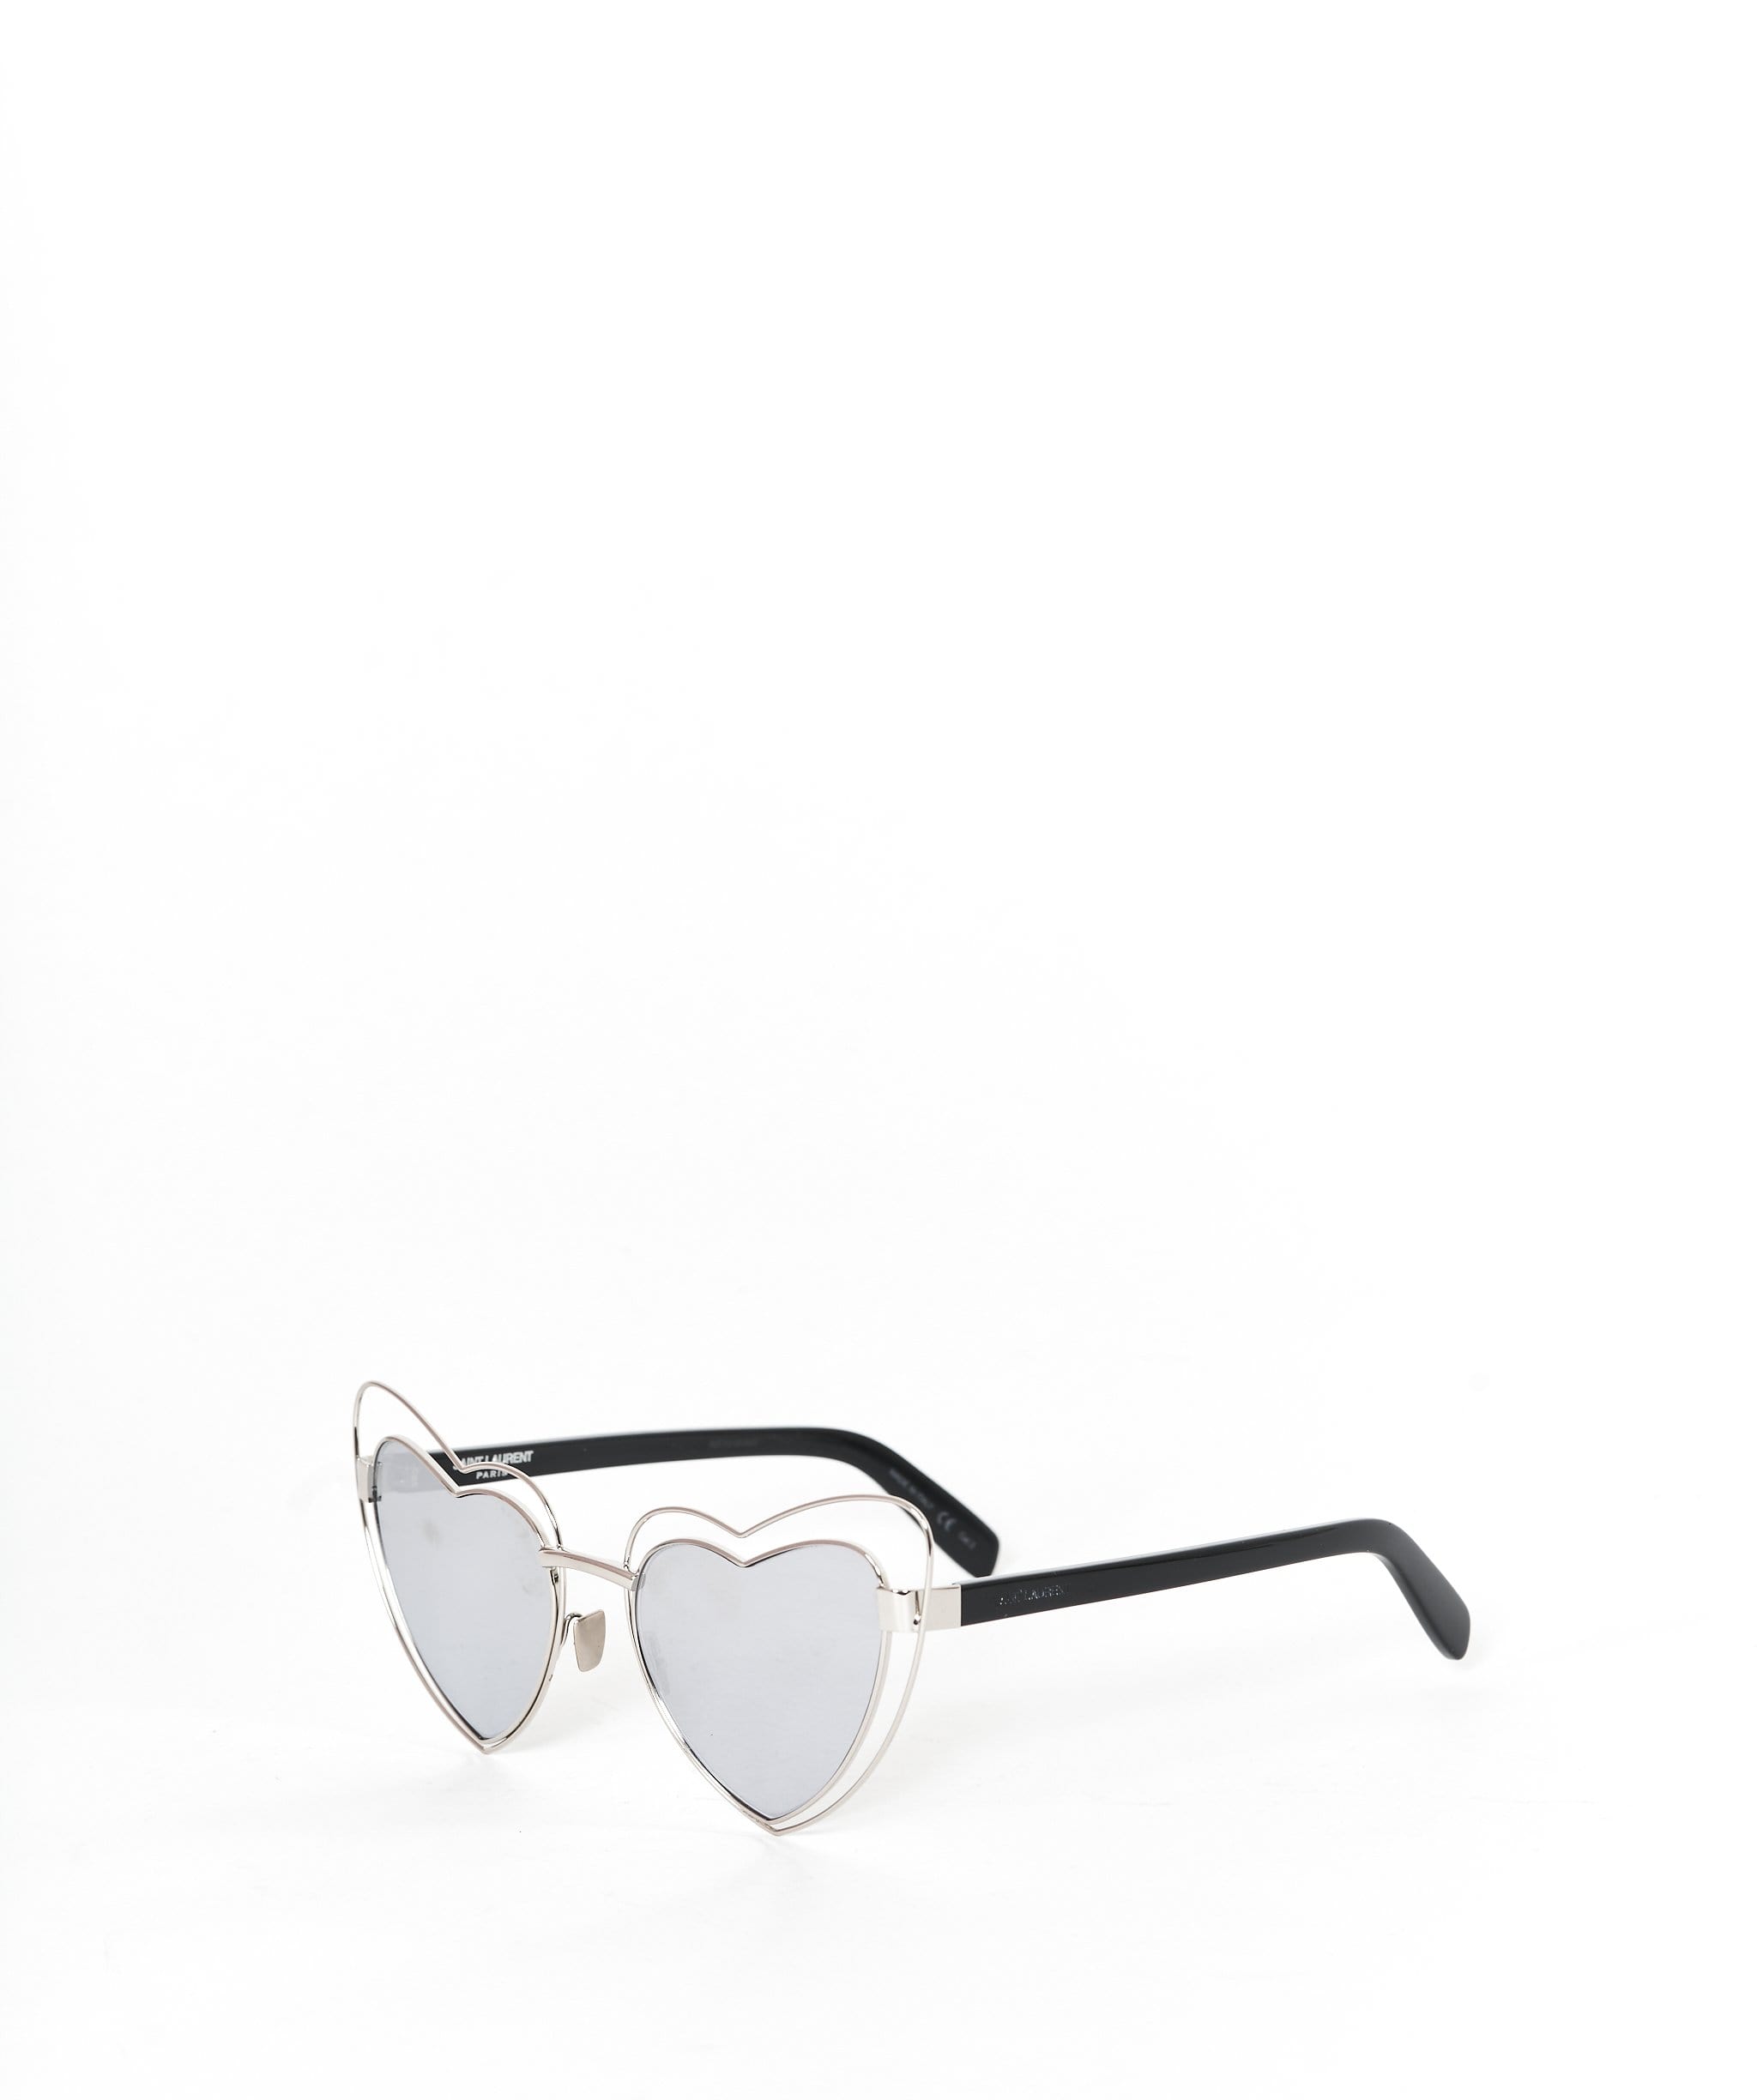 Yves Saint Laurent Saint Laurent love hear sunglasses